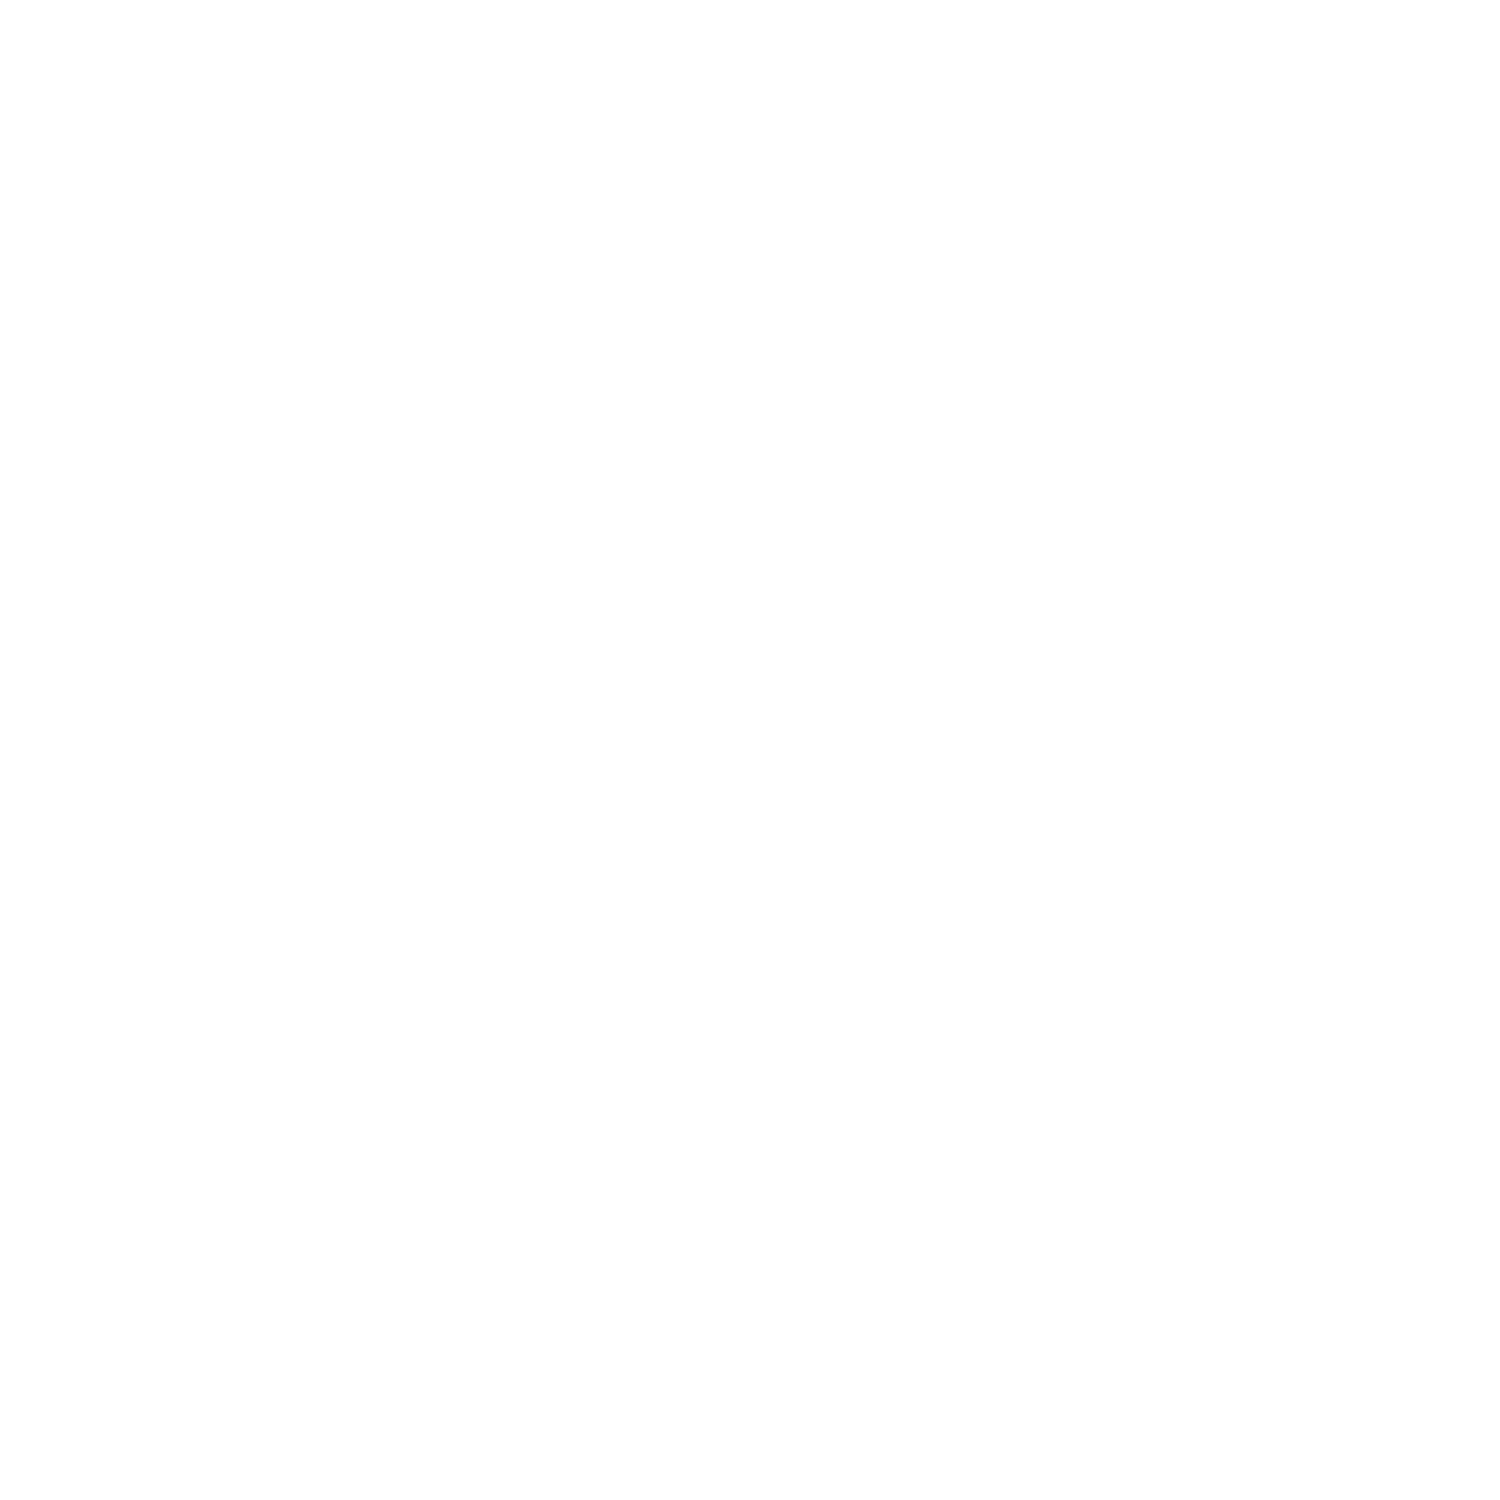 SFO logo